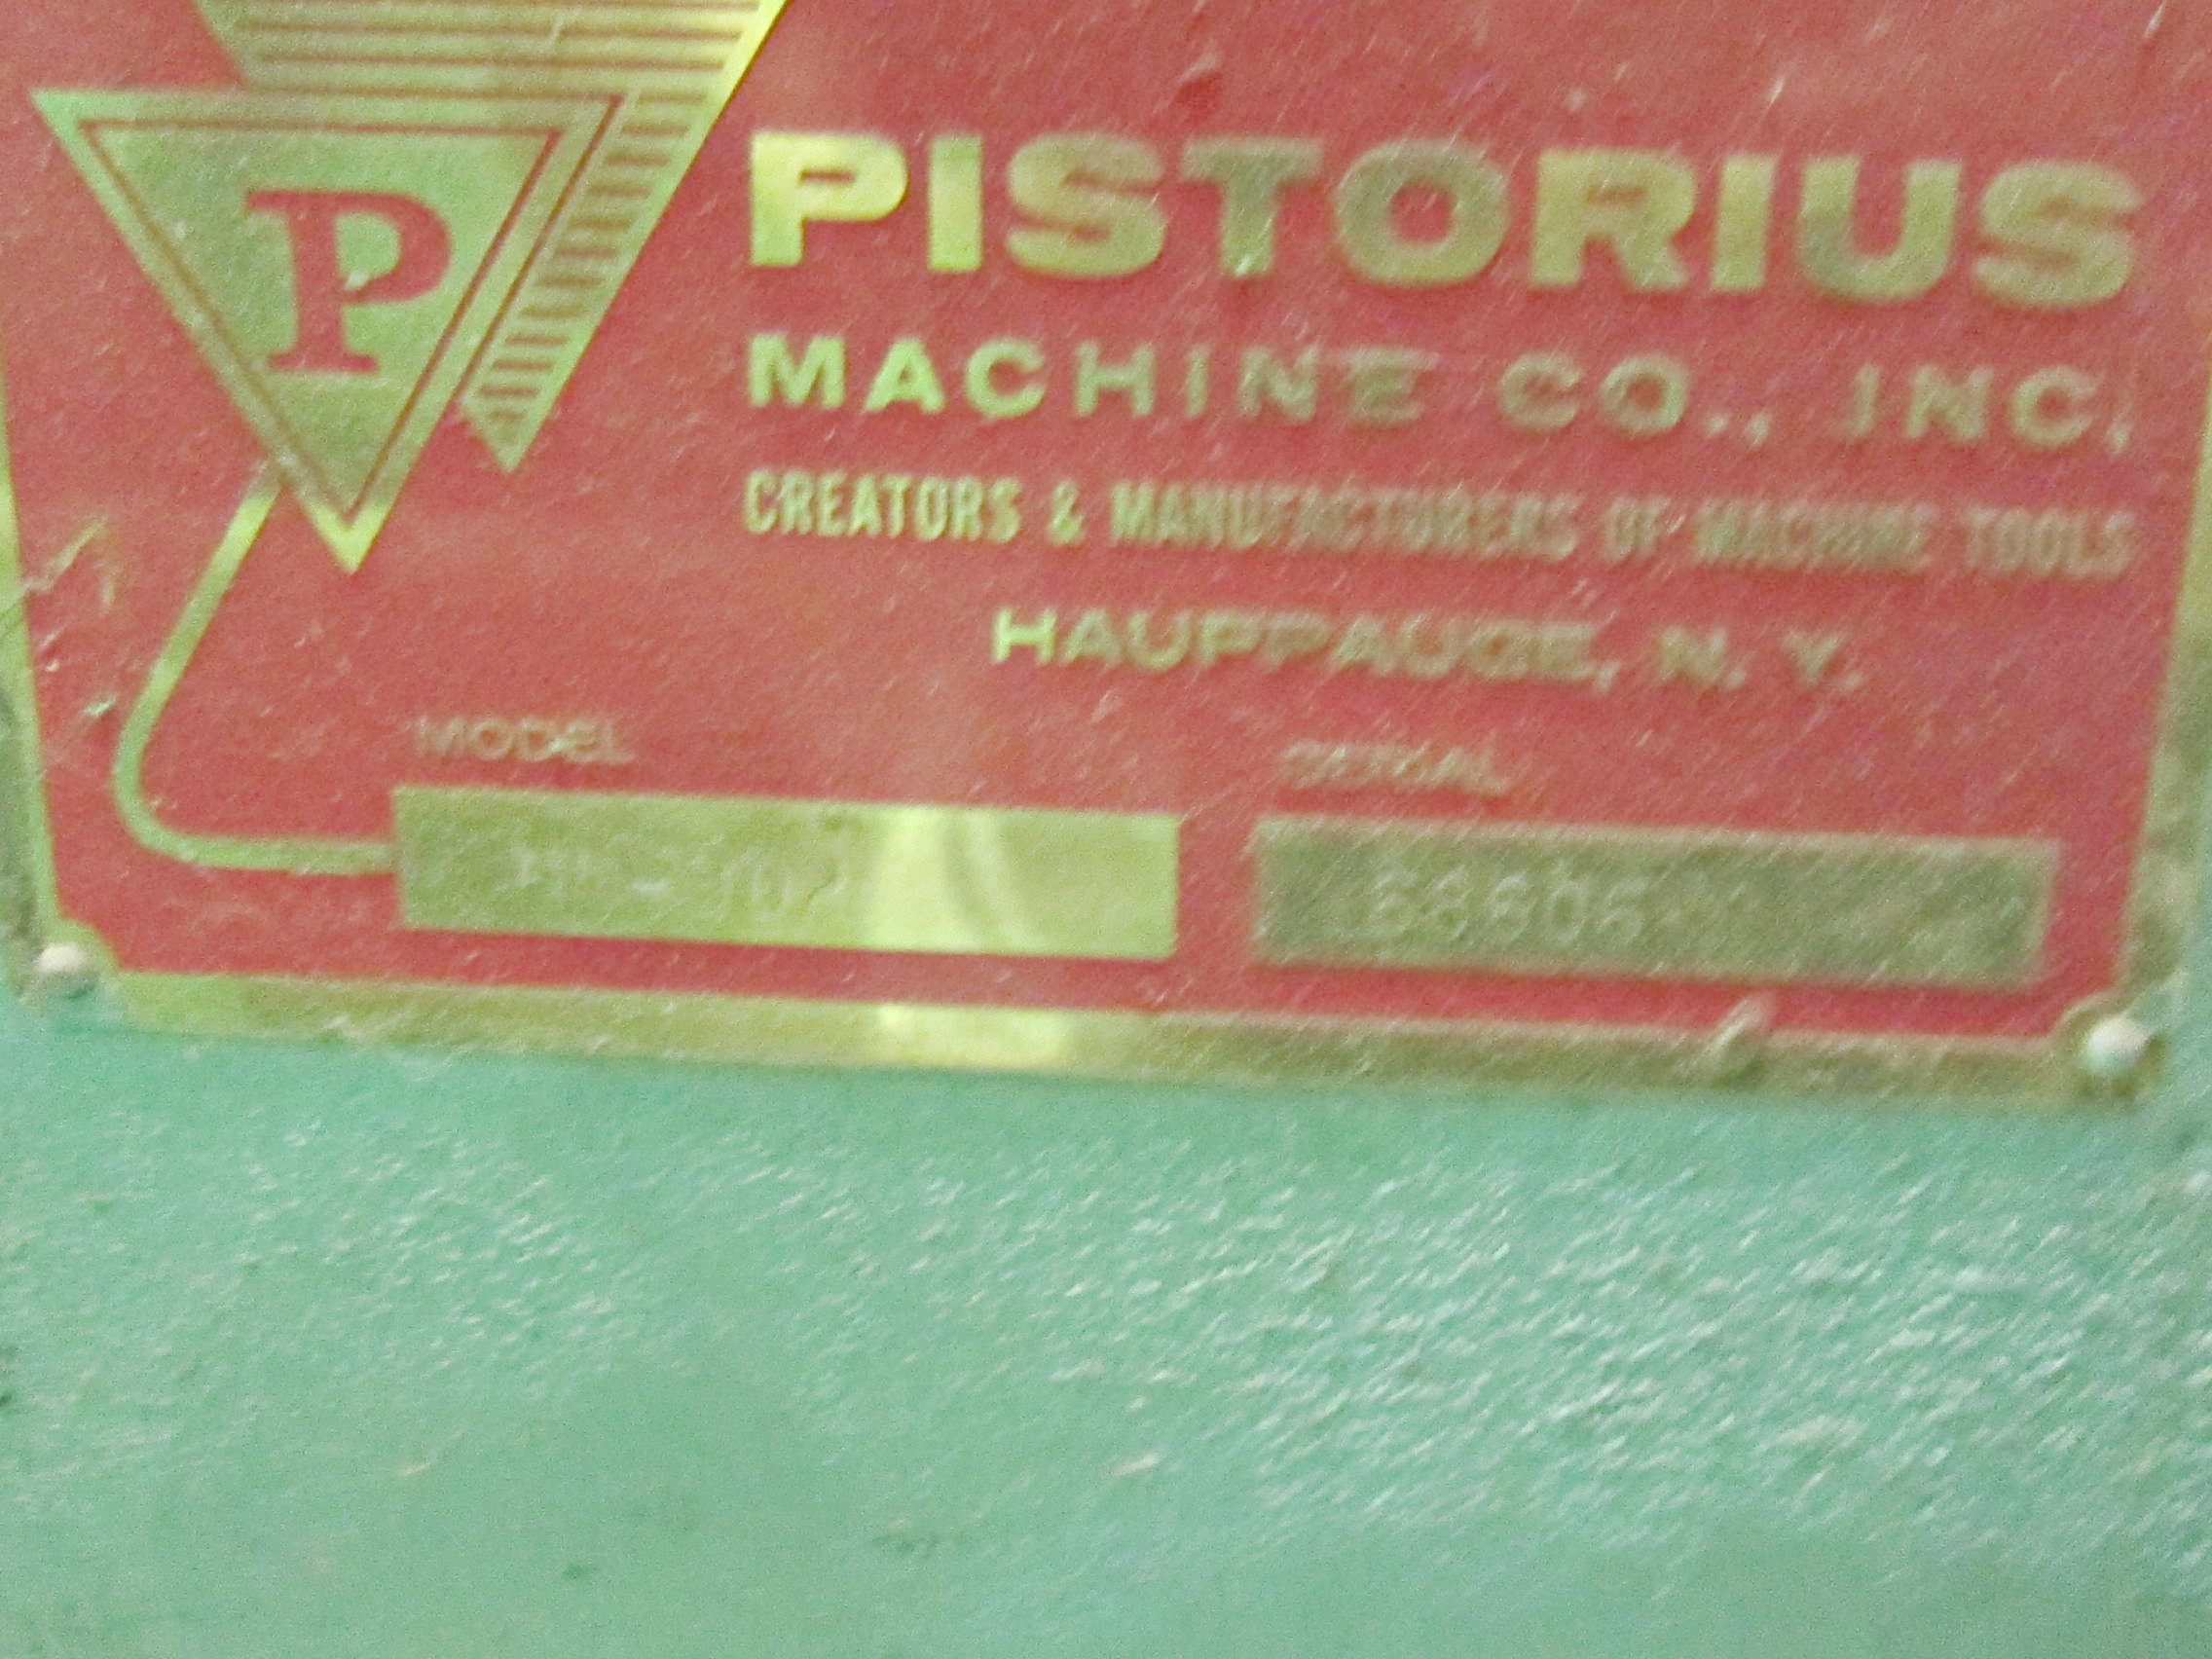 Pistorius MN-301 Pneumatic Double Mitre Notching Cut-Off Saw (used) Item # UFE-3261 (Oregon)